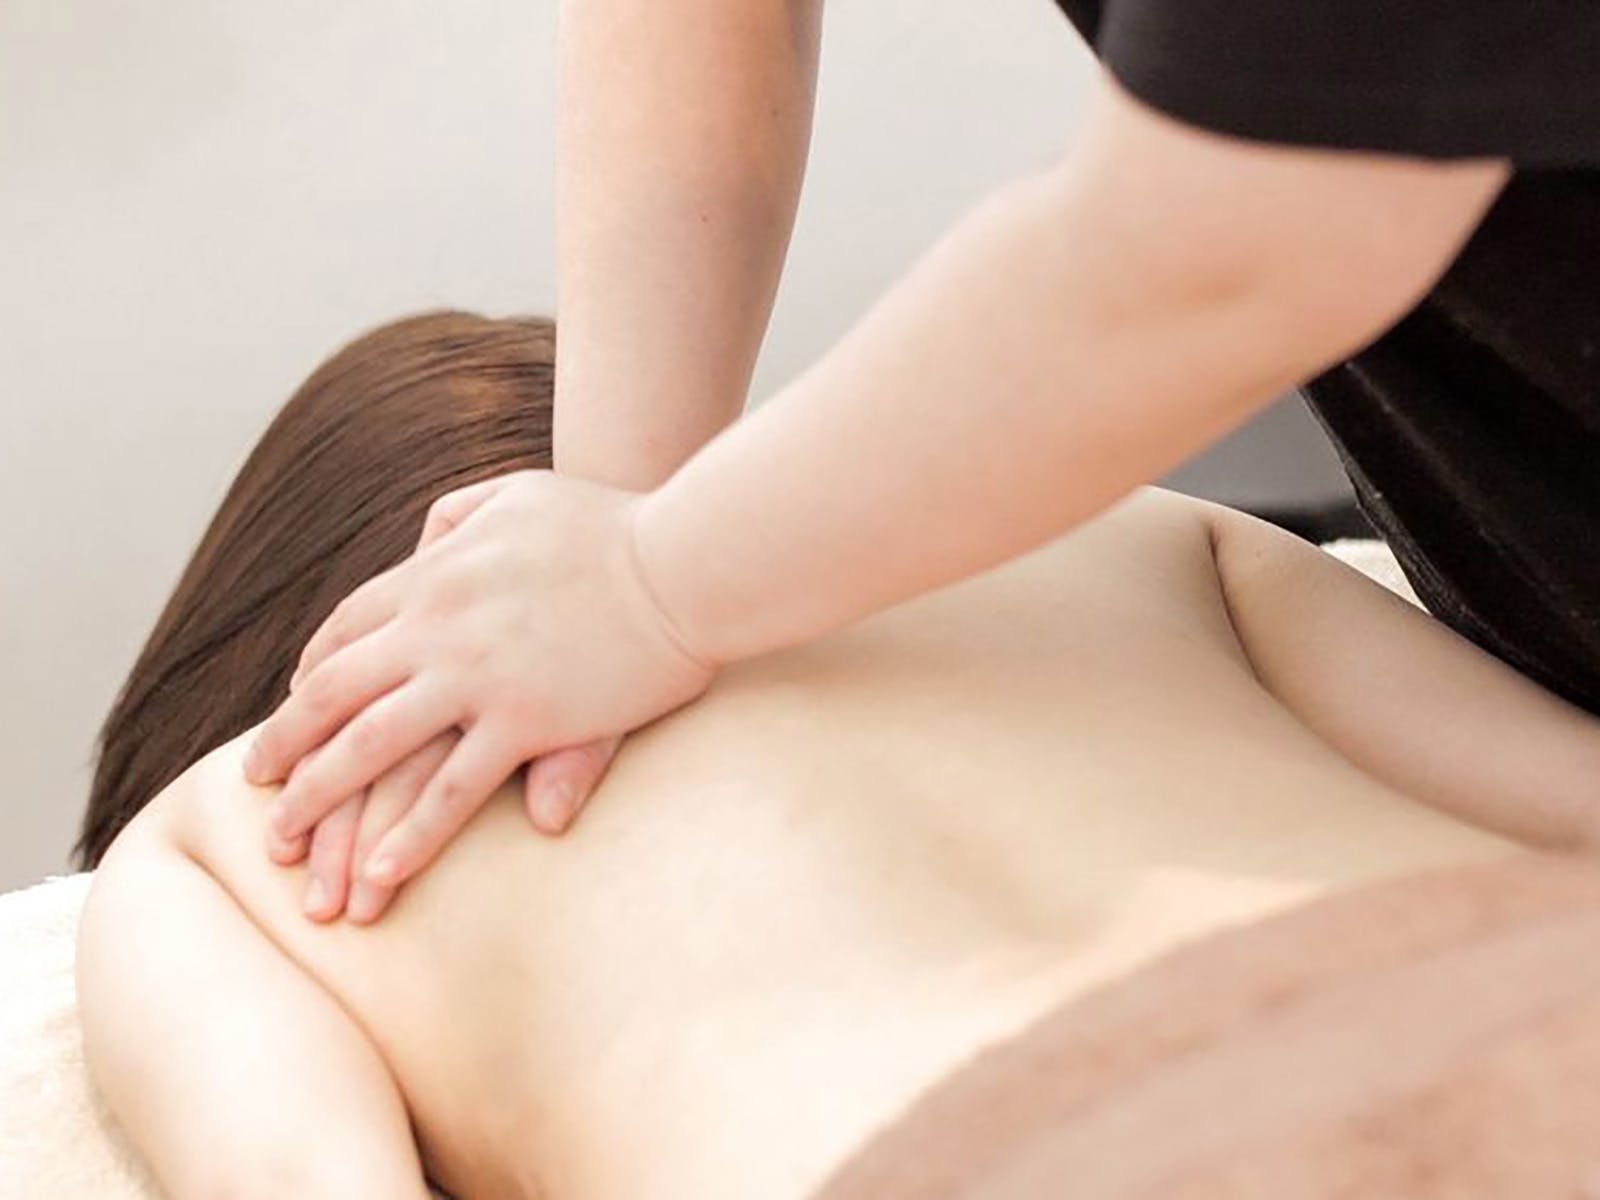 alfonso pableo share japan x massage photos